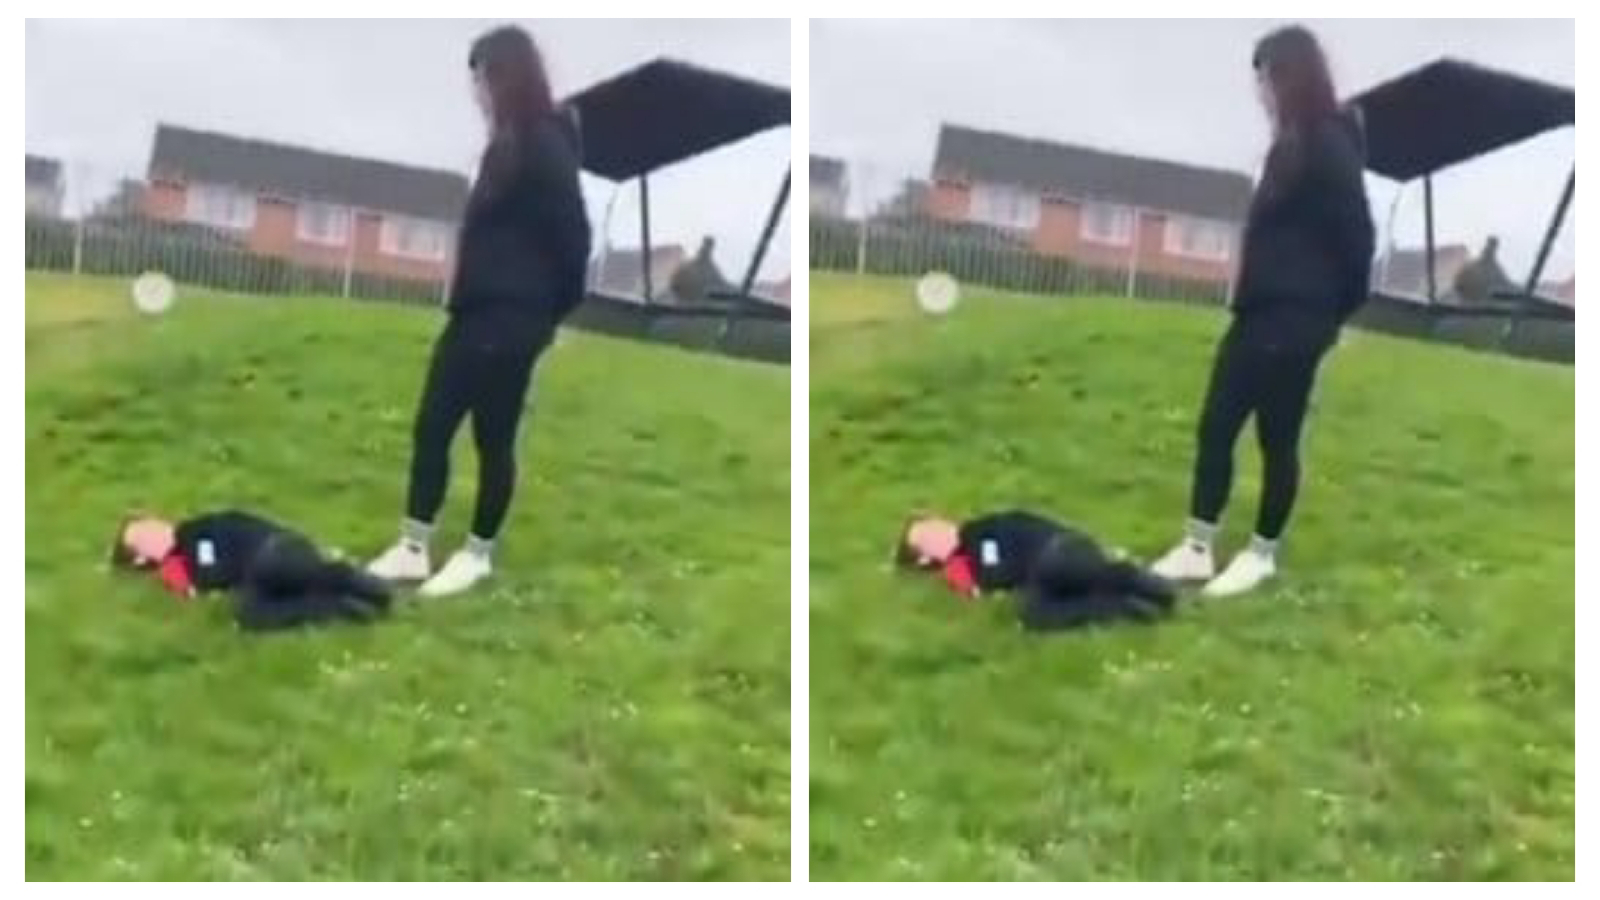 VIDEO Lexi Bonner kicking 8 year old kid wearing red tshirt in